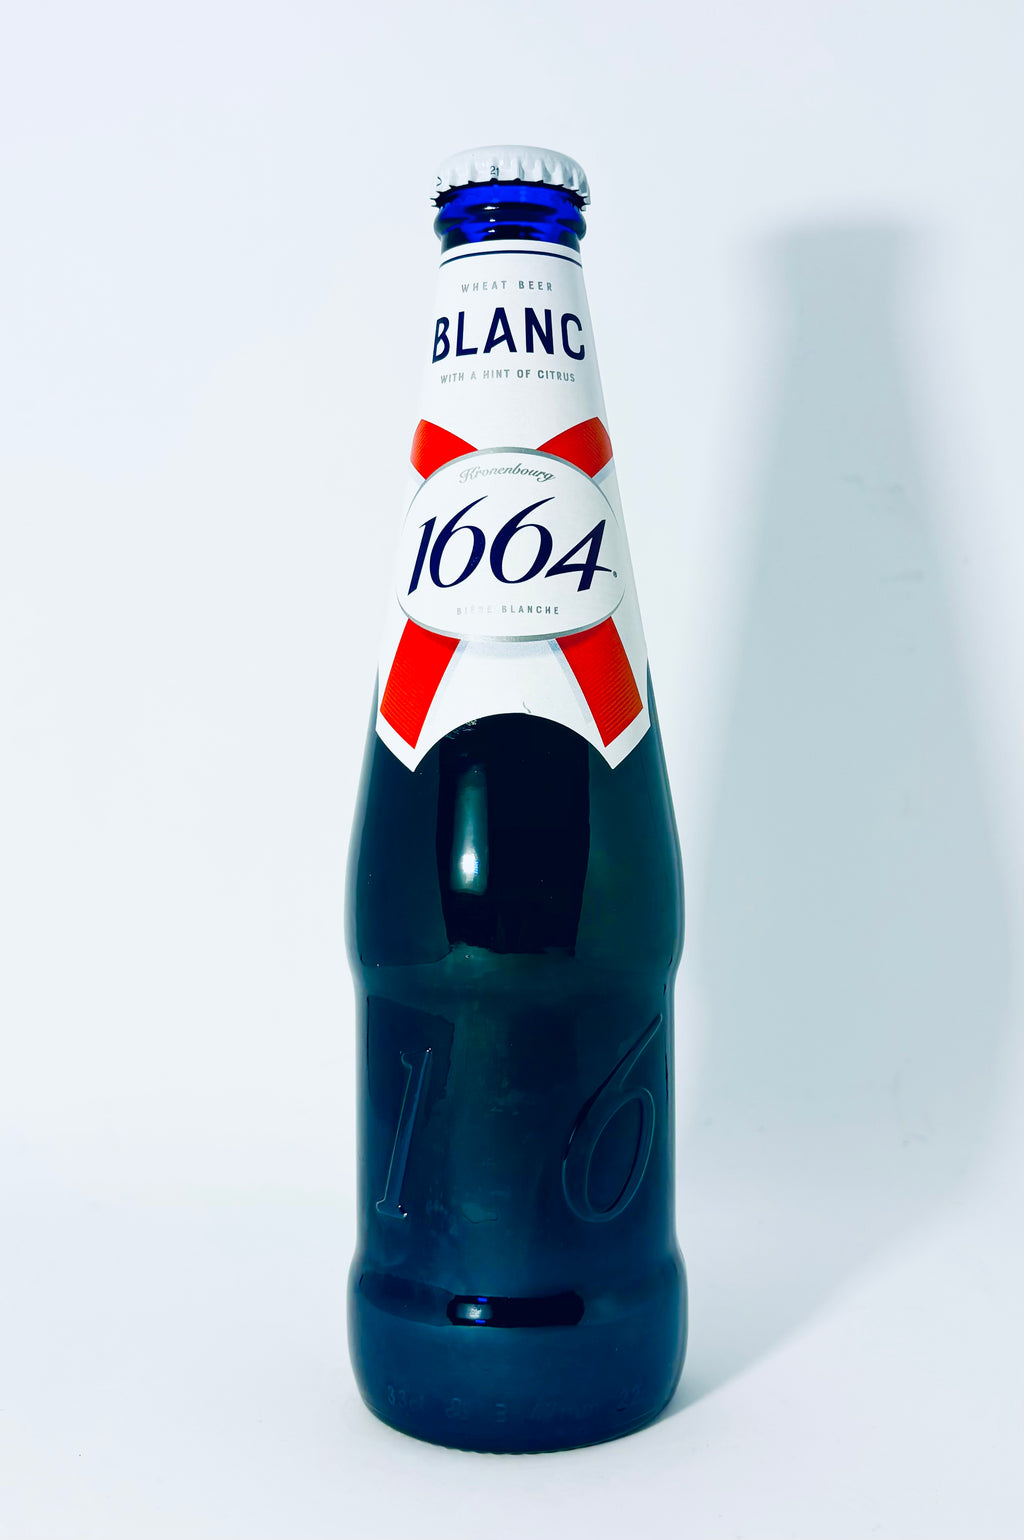 1664 Blanc 5%, 33cl - Kronenbourg (inkl. pant)